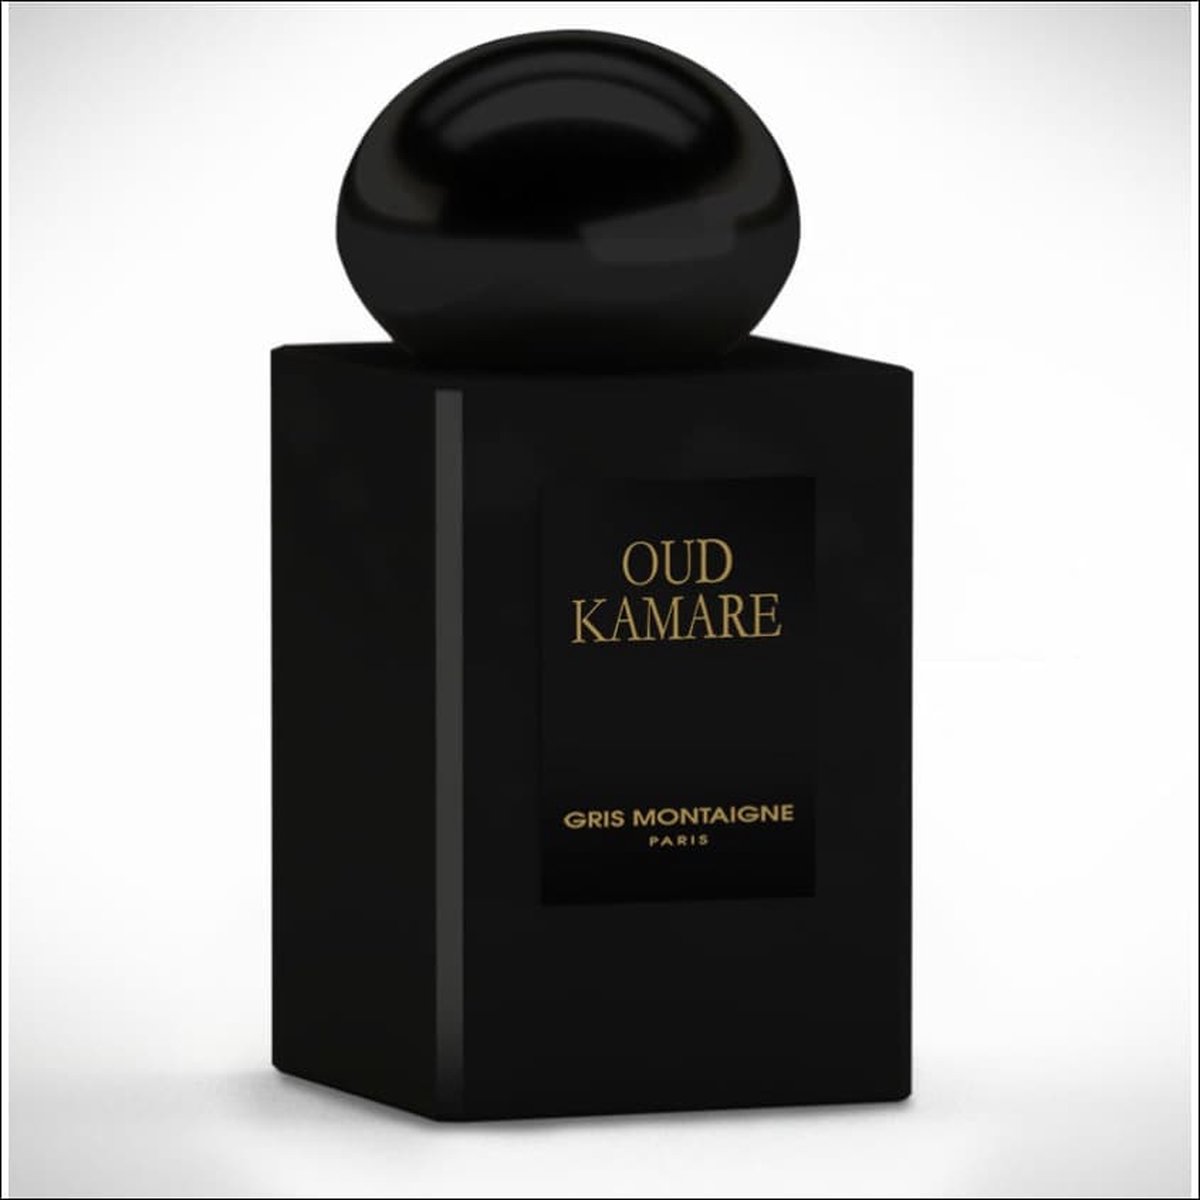 Gris Montaigne Paris Oud Kamare Perfume Extract - 75 ML